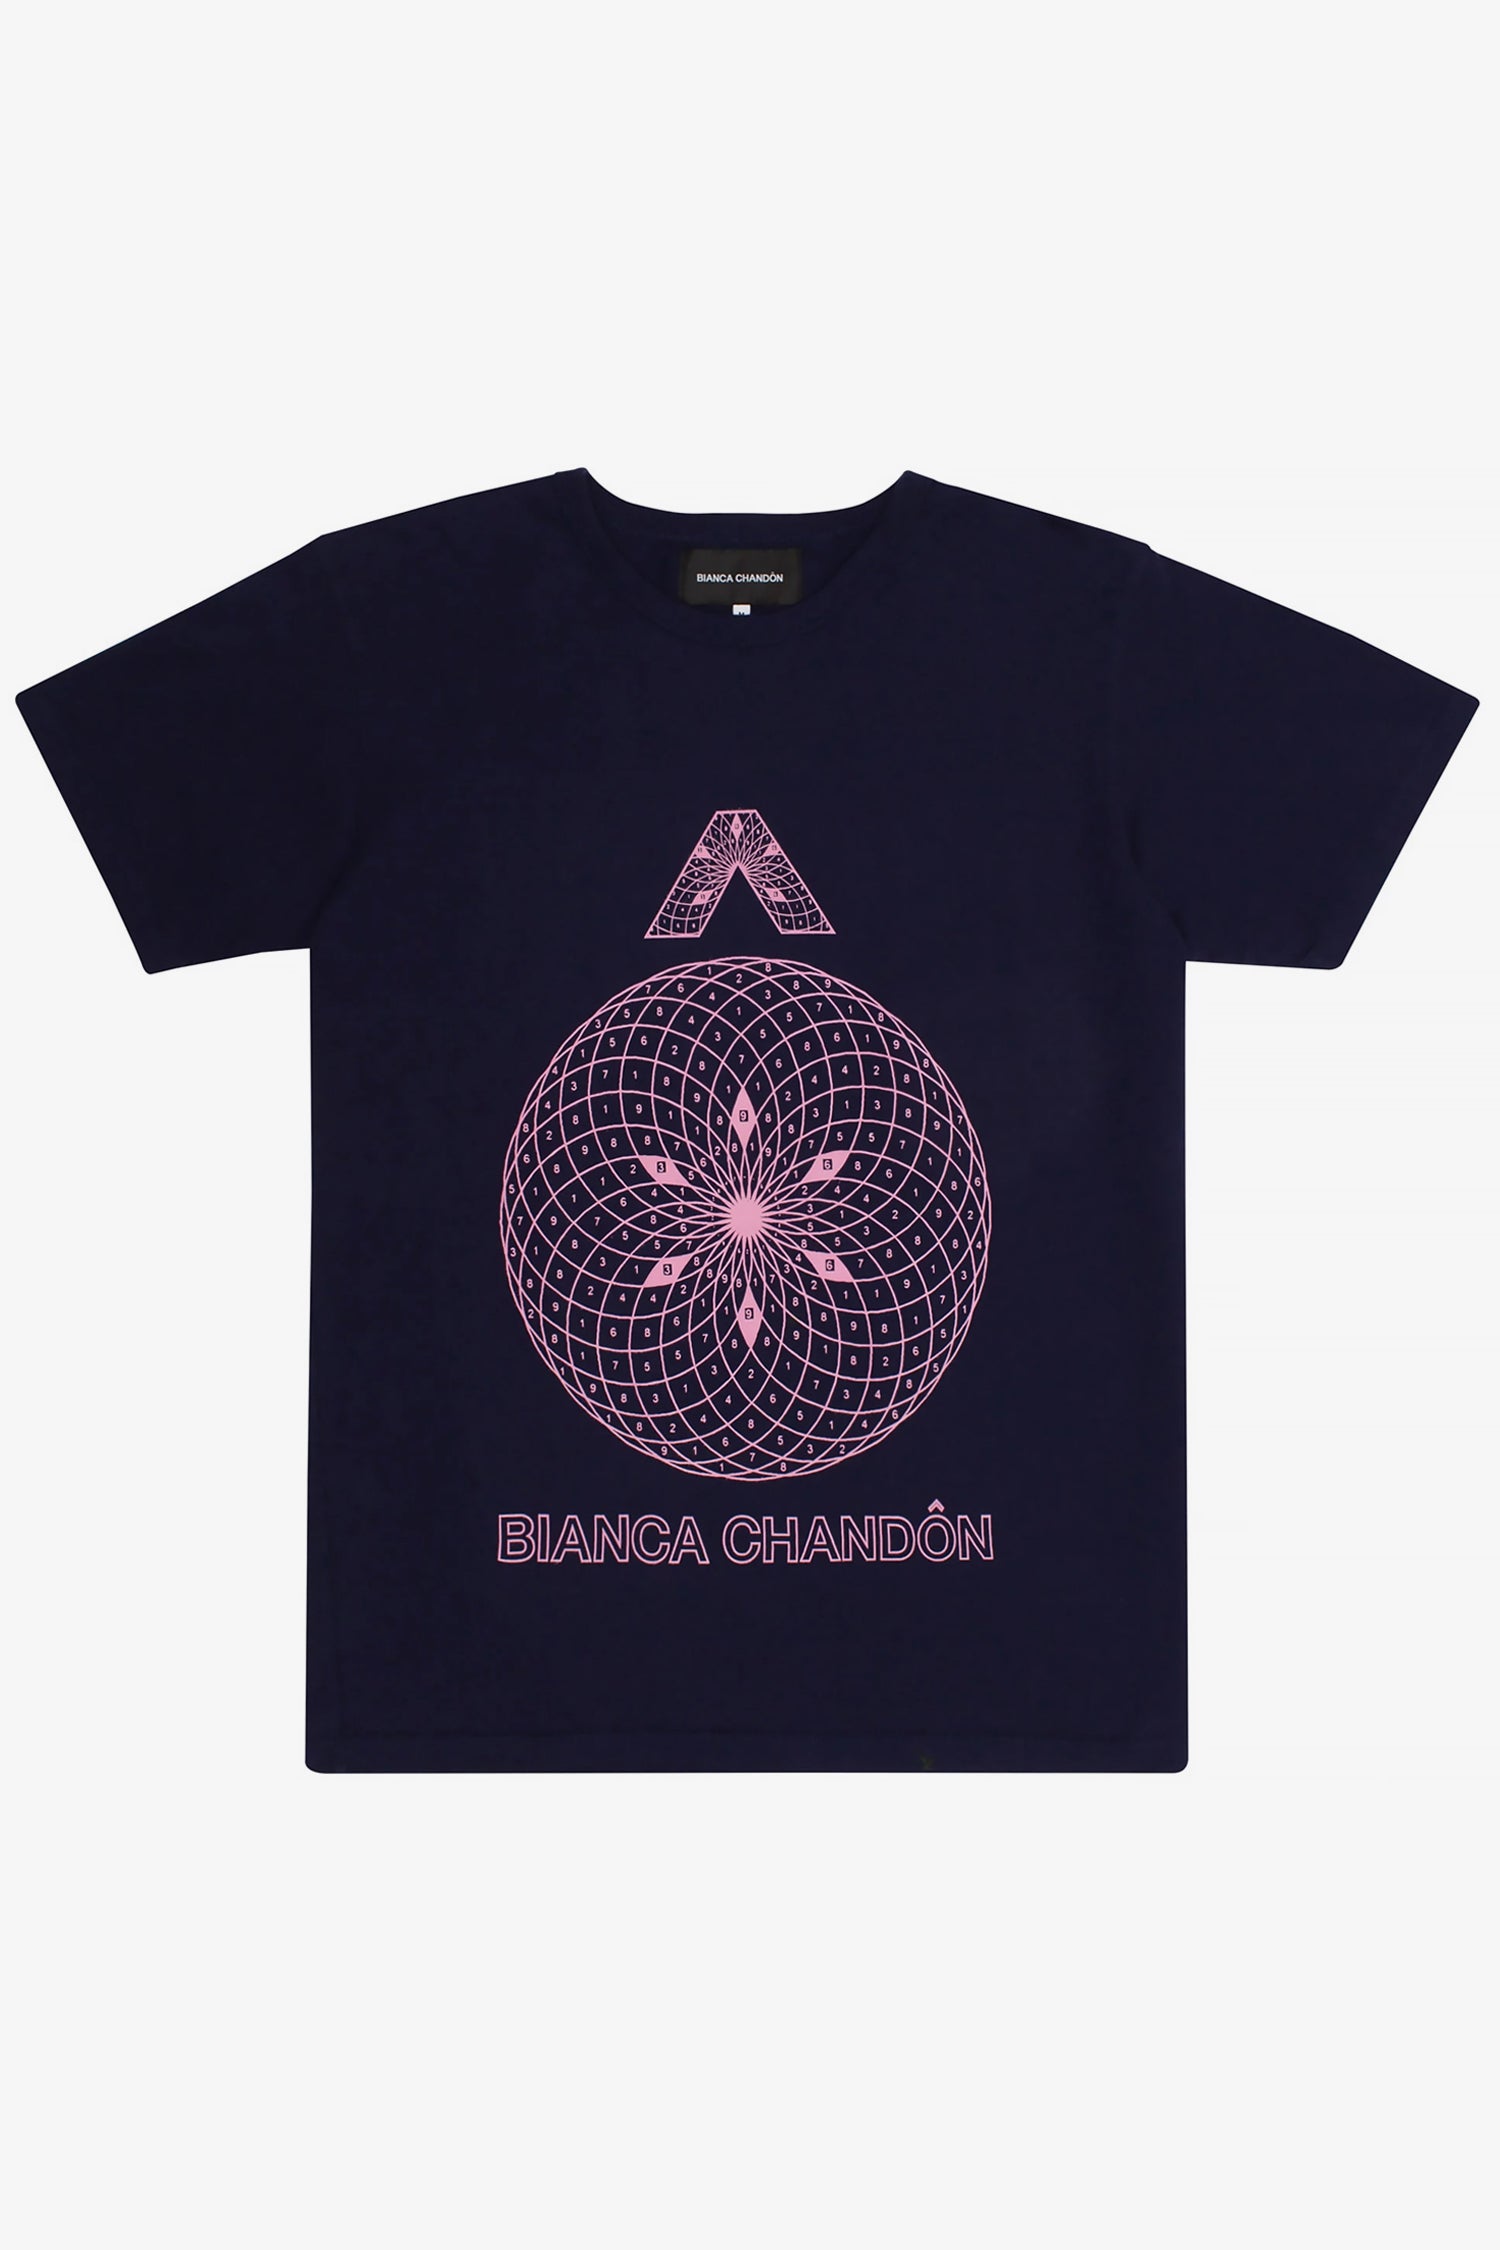 Selectshop FRAME - BIANCA CHANDON Sacred Circumflex T-Shirt T-Shirt Dubai